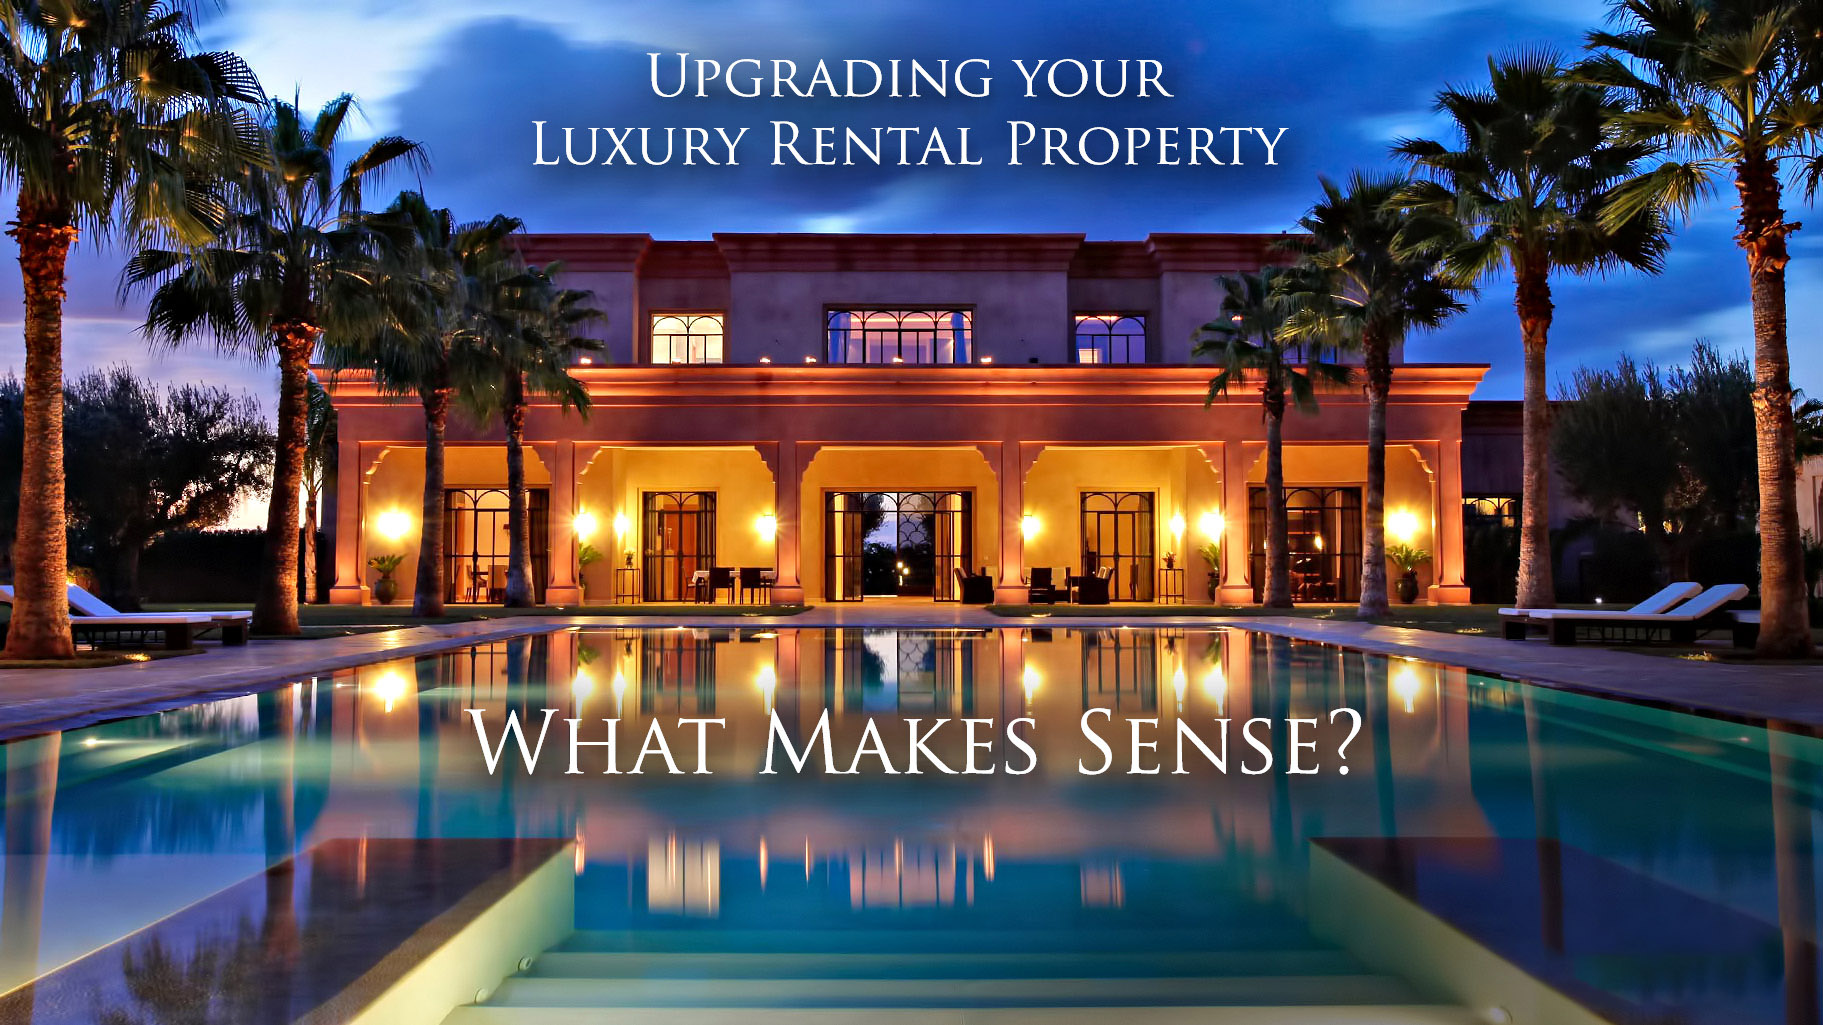 Upgrading your Luxury Rental Property - What Makes Sense?